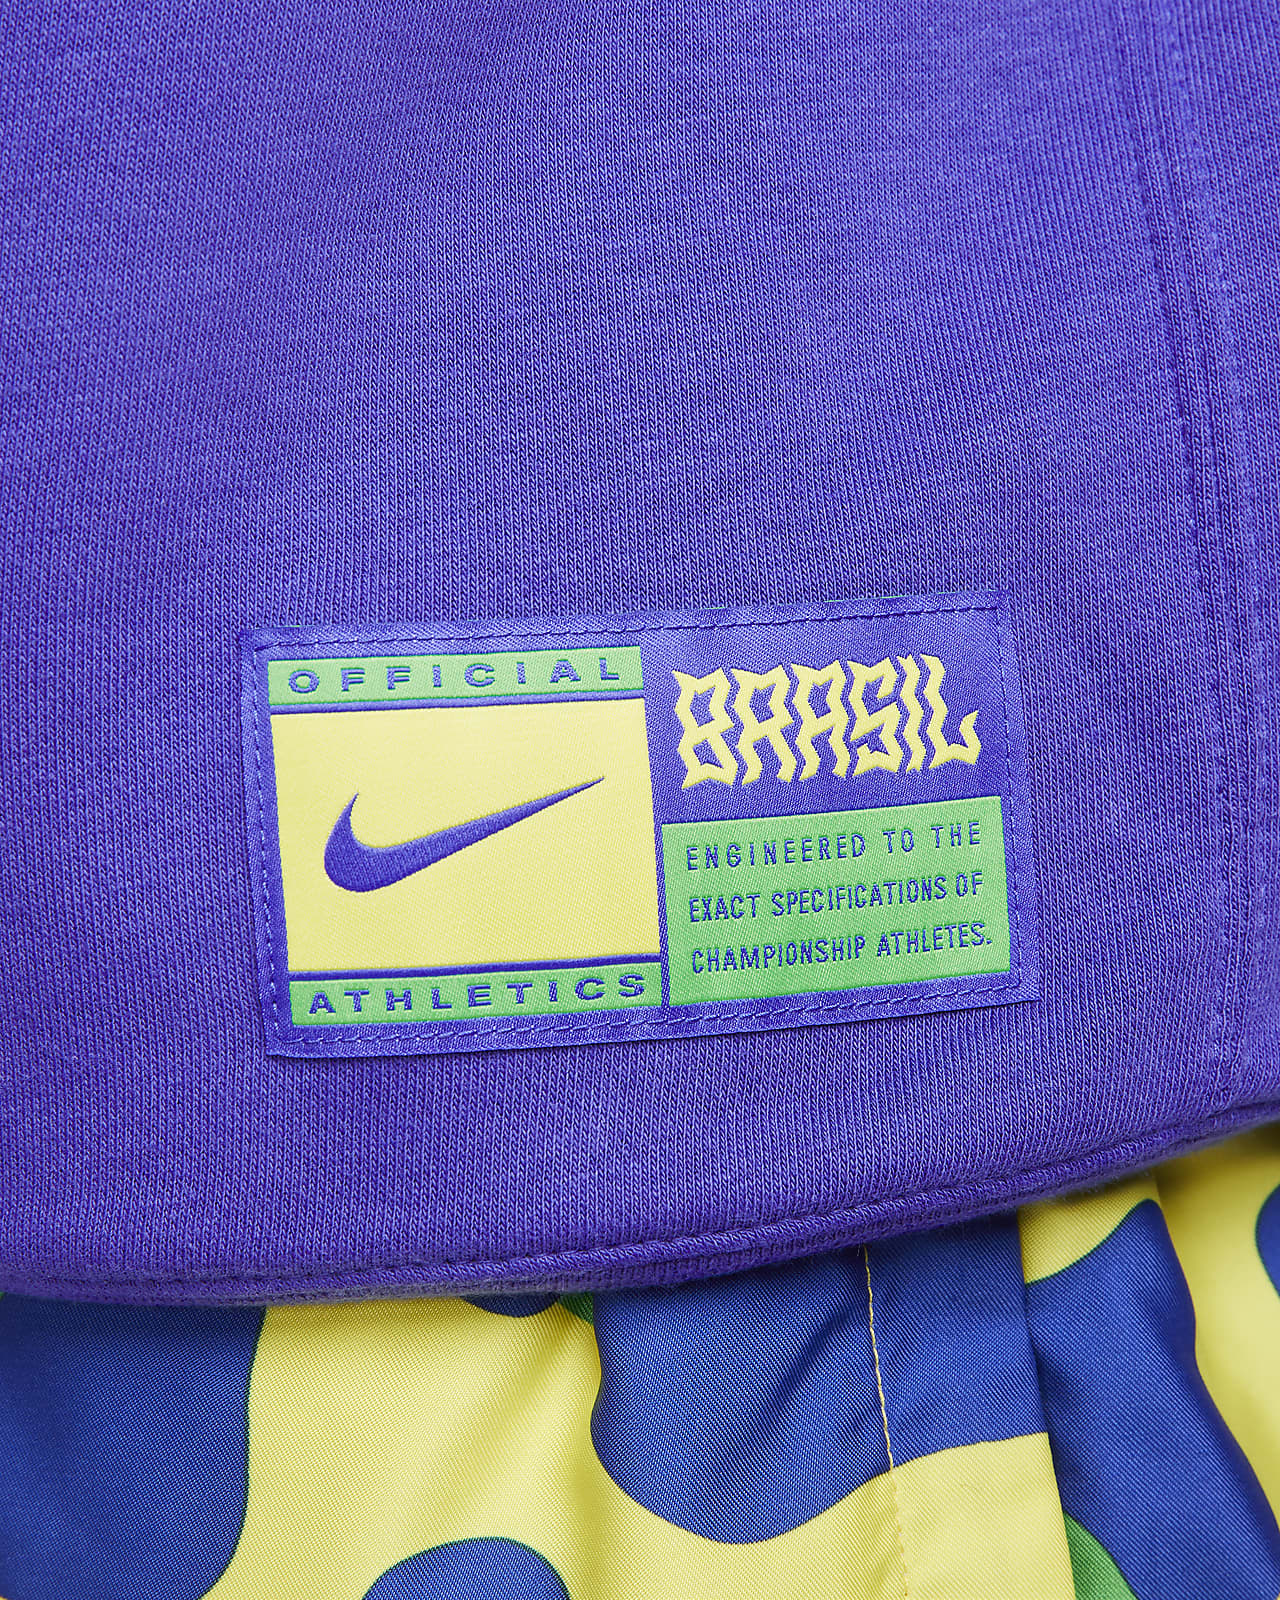 Jacket Nike Brazil French Terry Football Tracksuit Jacket DX2045